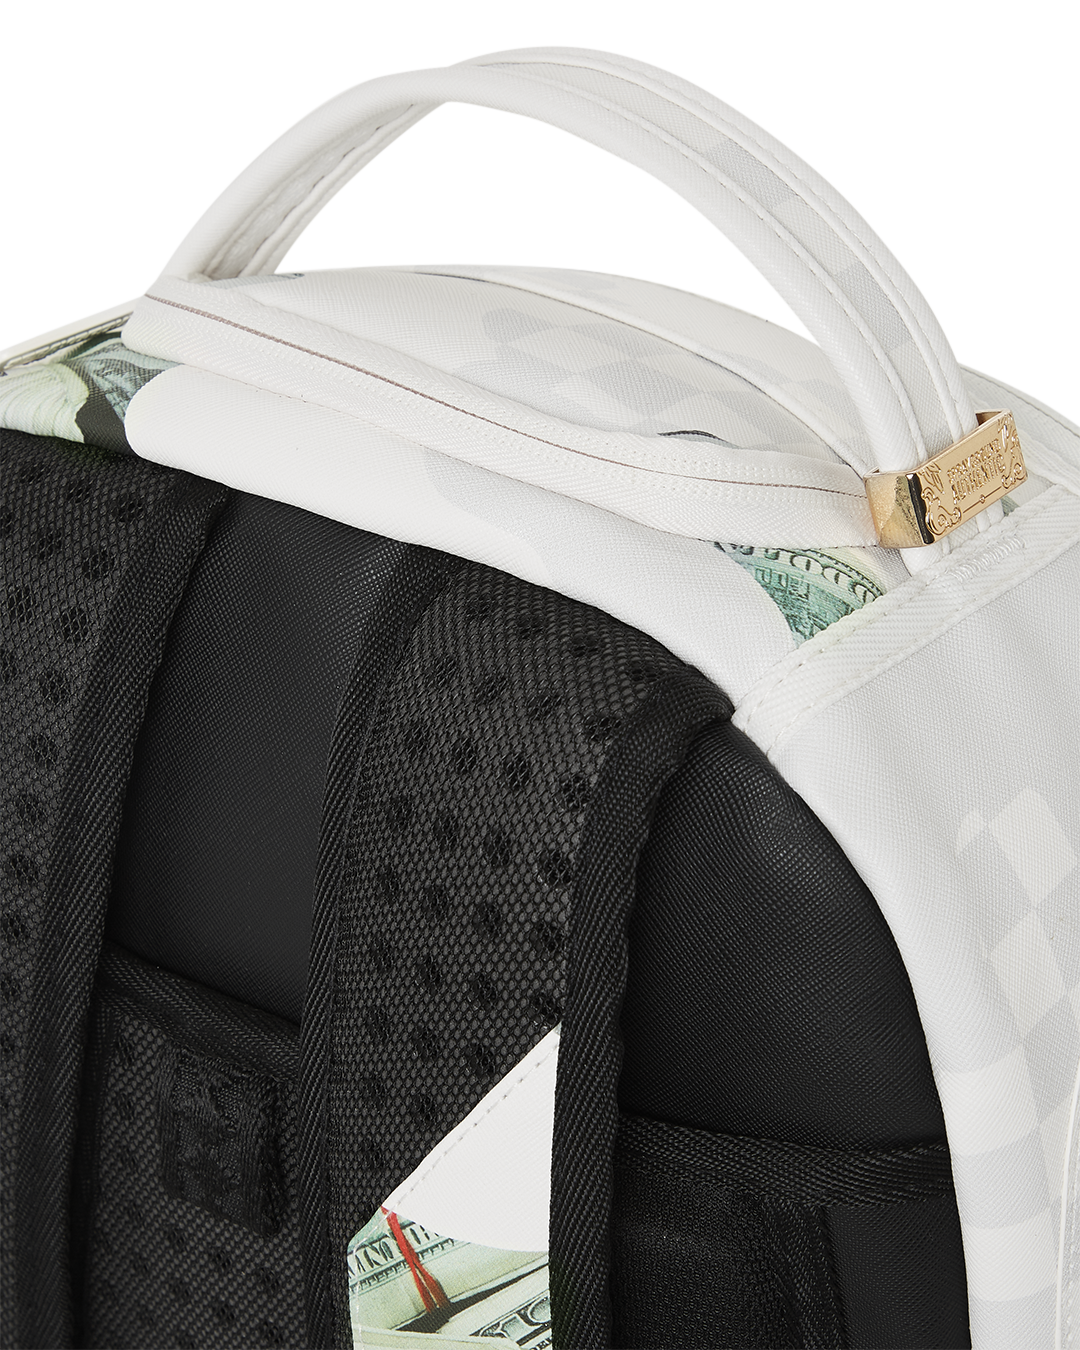 Sprayground Origami Money Wings Backpack